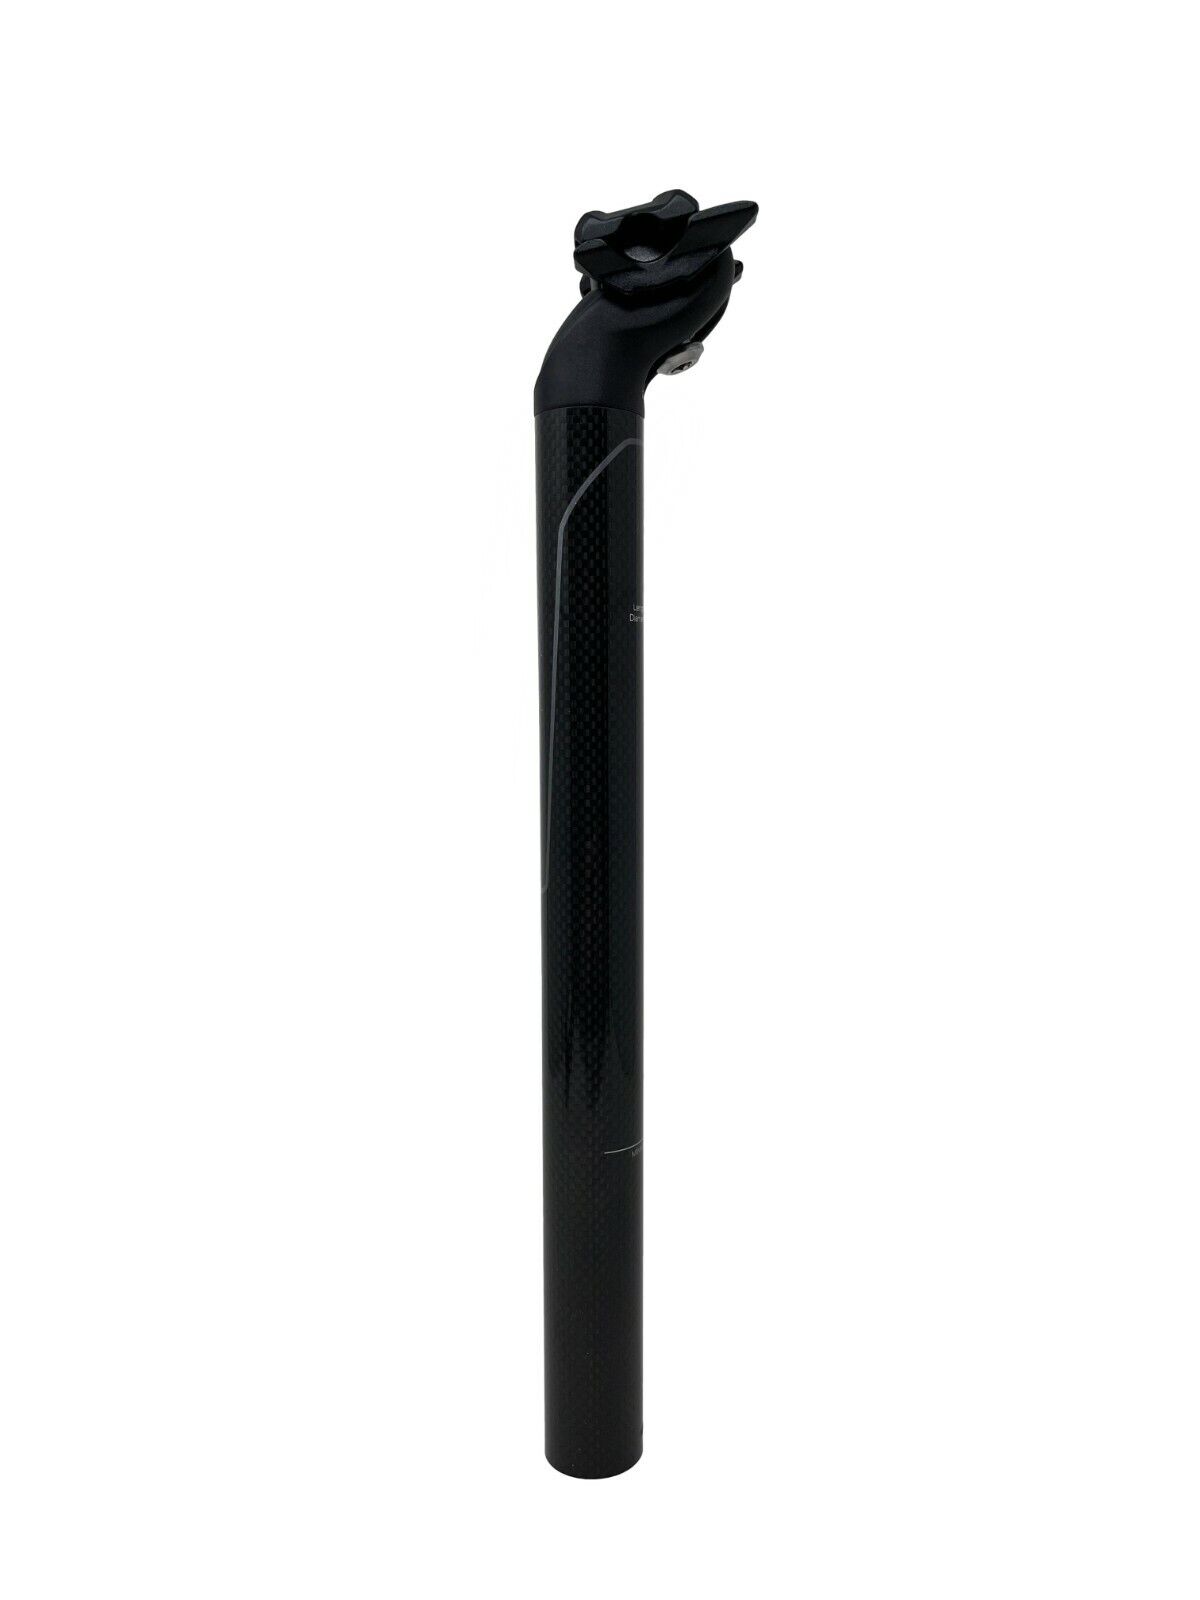 Giant Connect Carbon Seatpost - 30.9mm - 350mm Length - Carbon - Sportandleisure.com